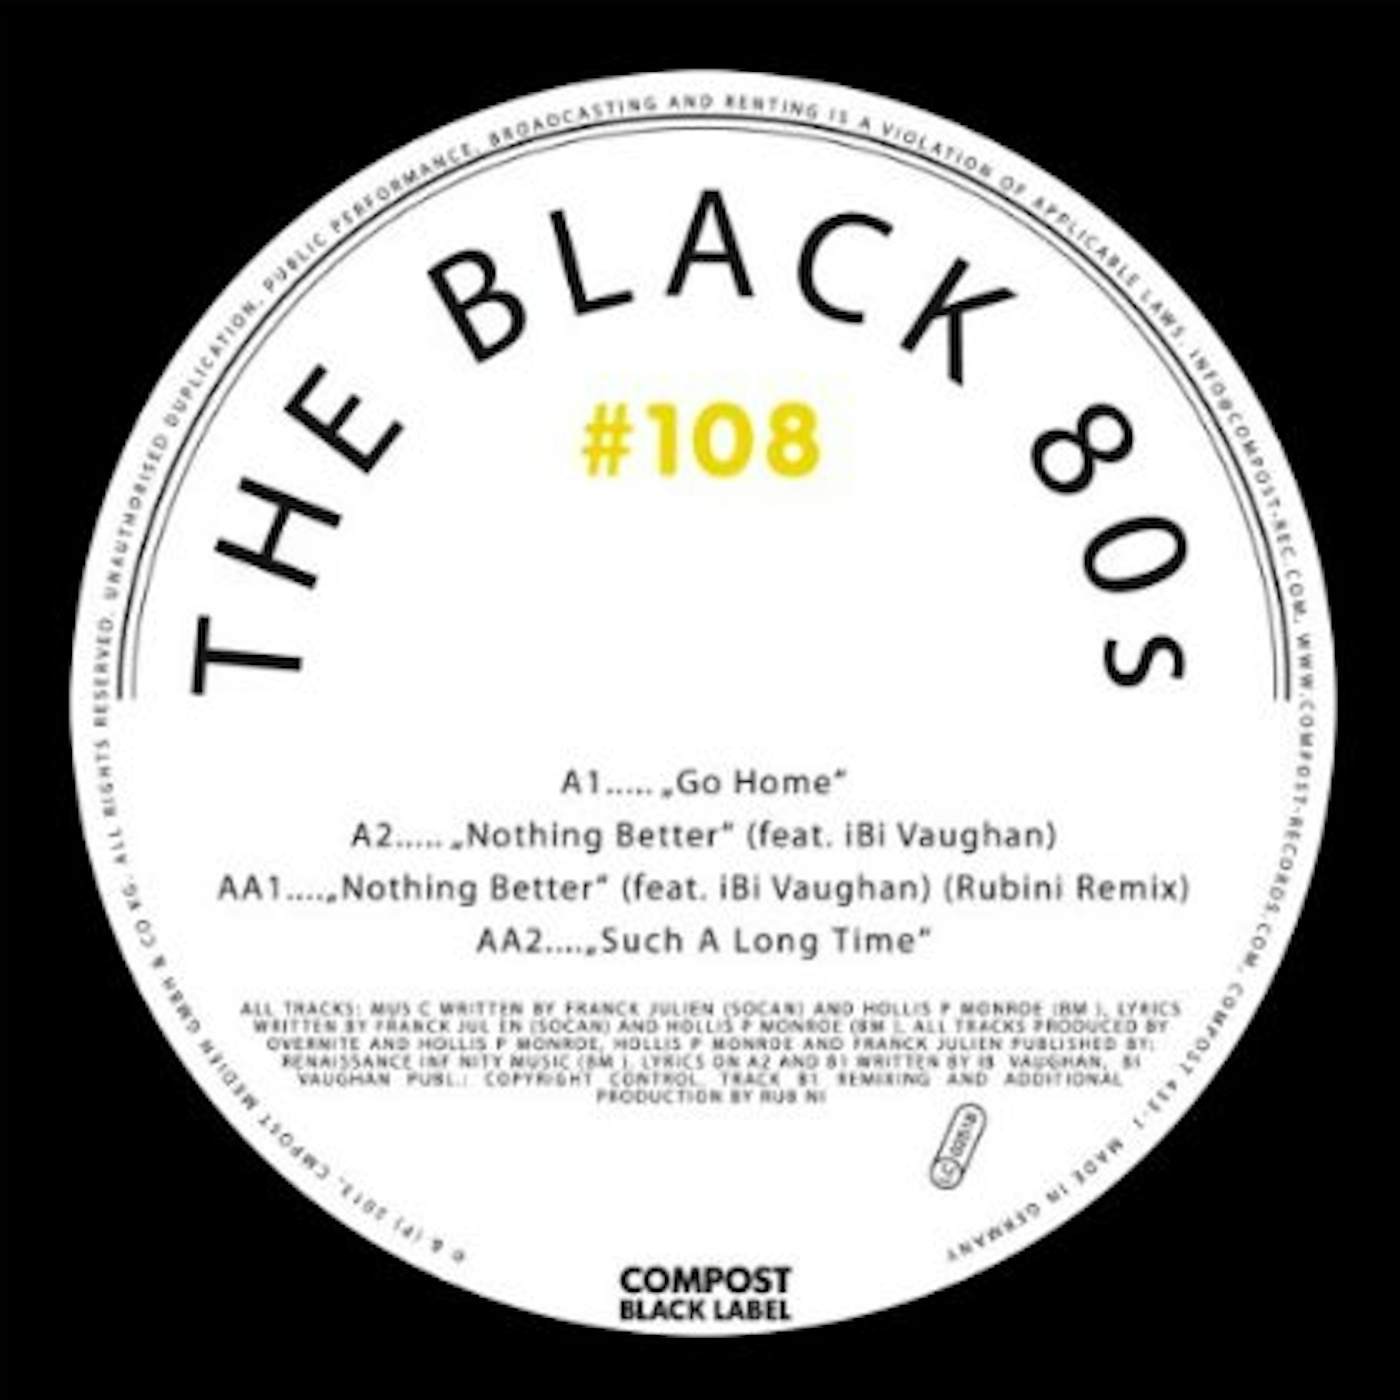 The Black 80s COMPOST BLACK LABEL 108 Vinyl Record